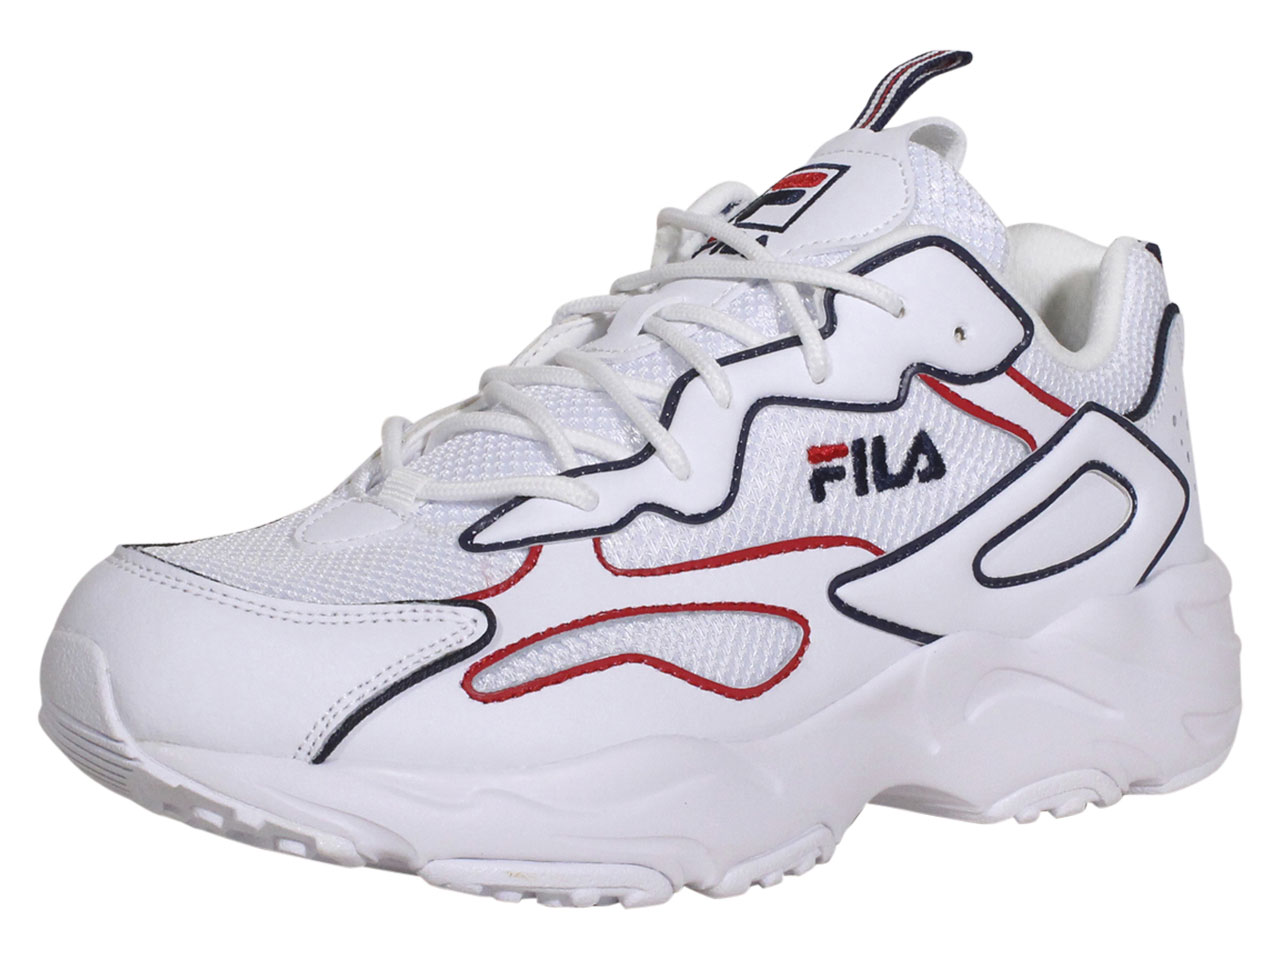 Fila Ray-Tracer-Contrast-Piping Sneakers Men's Shoes JoyLot.com